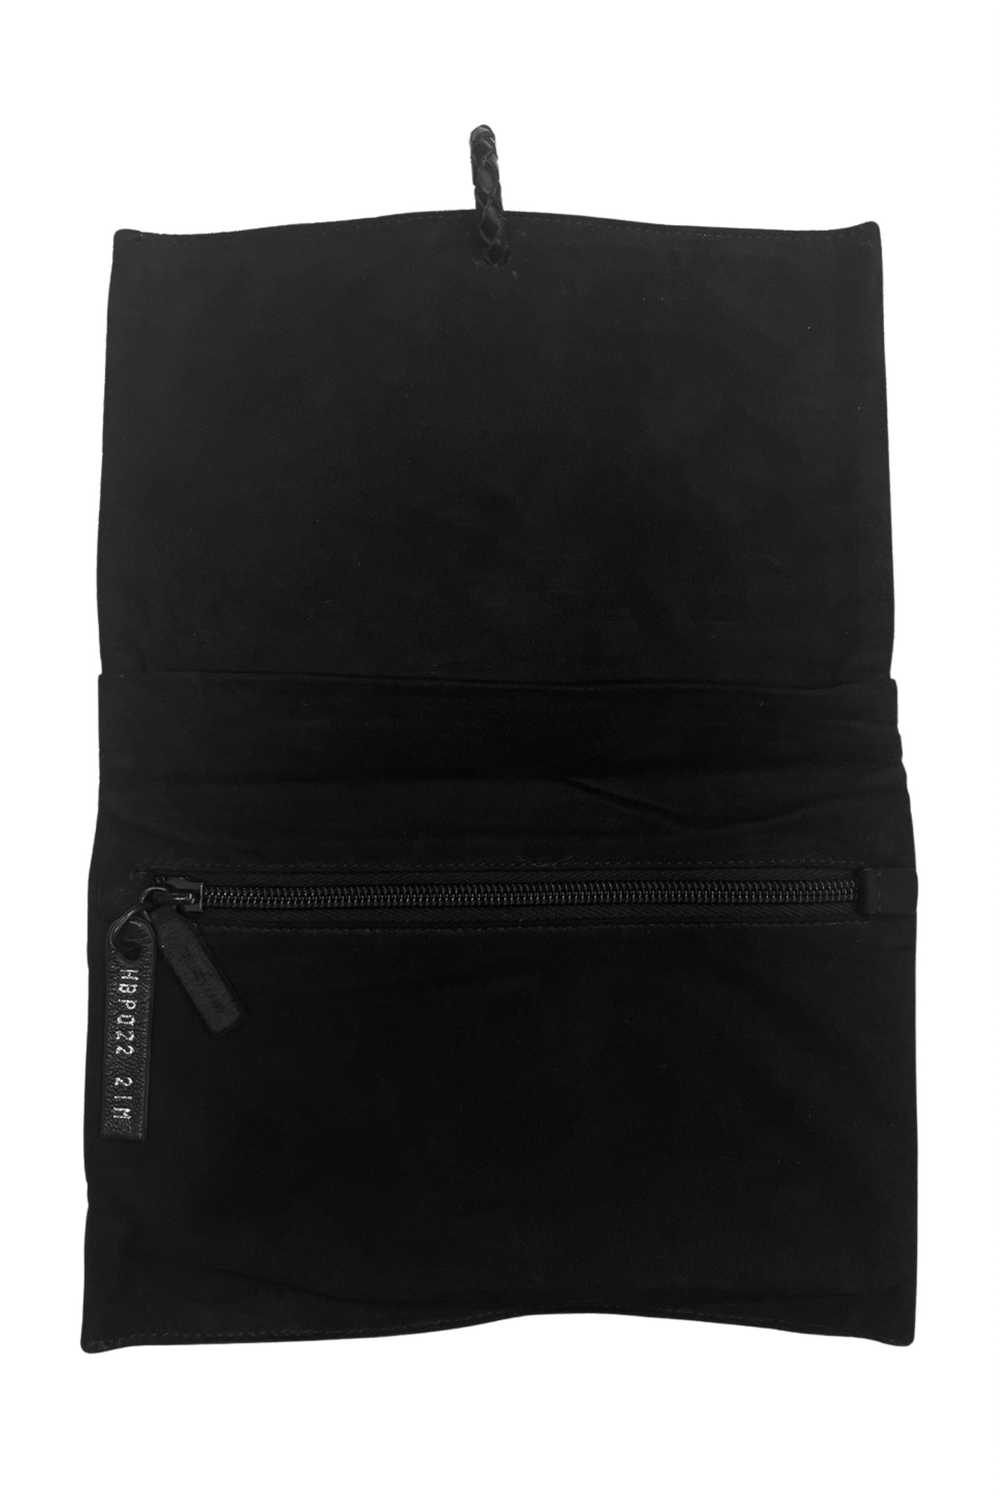 HELMUT LANG BLACK SUEDE FOLD OVER CLUTCH BAG WITH… - image 2